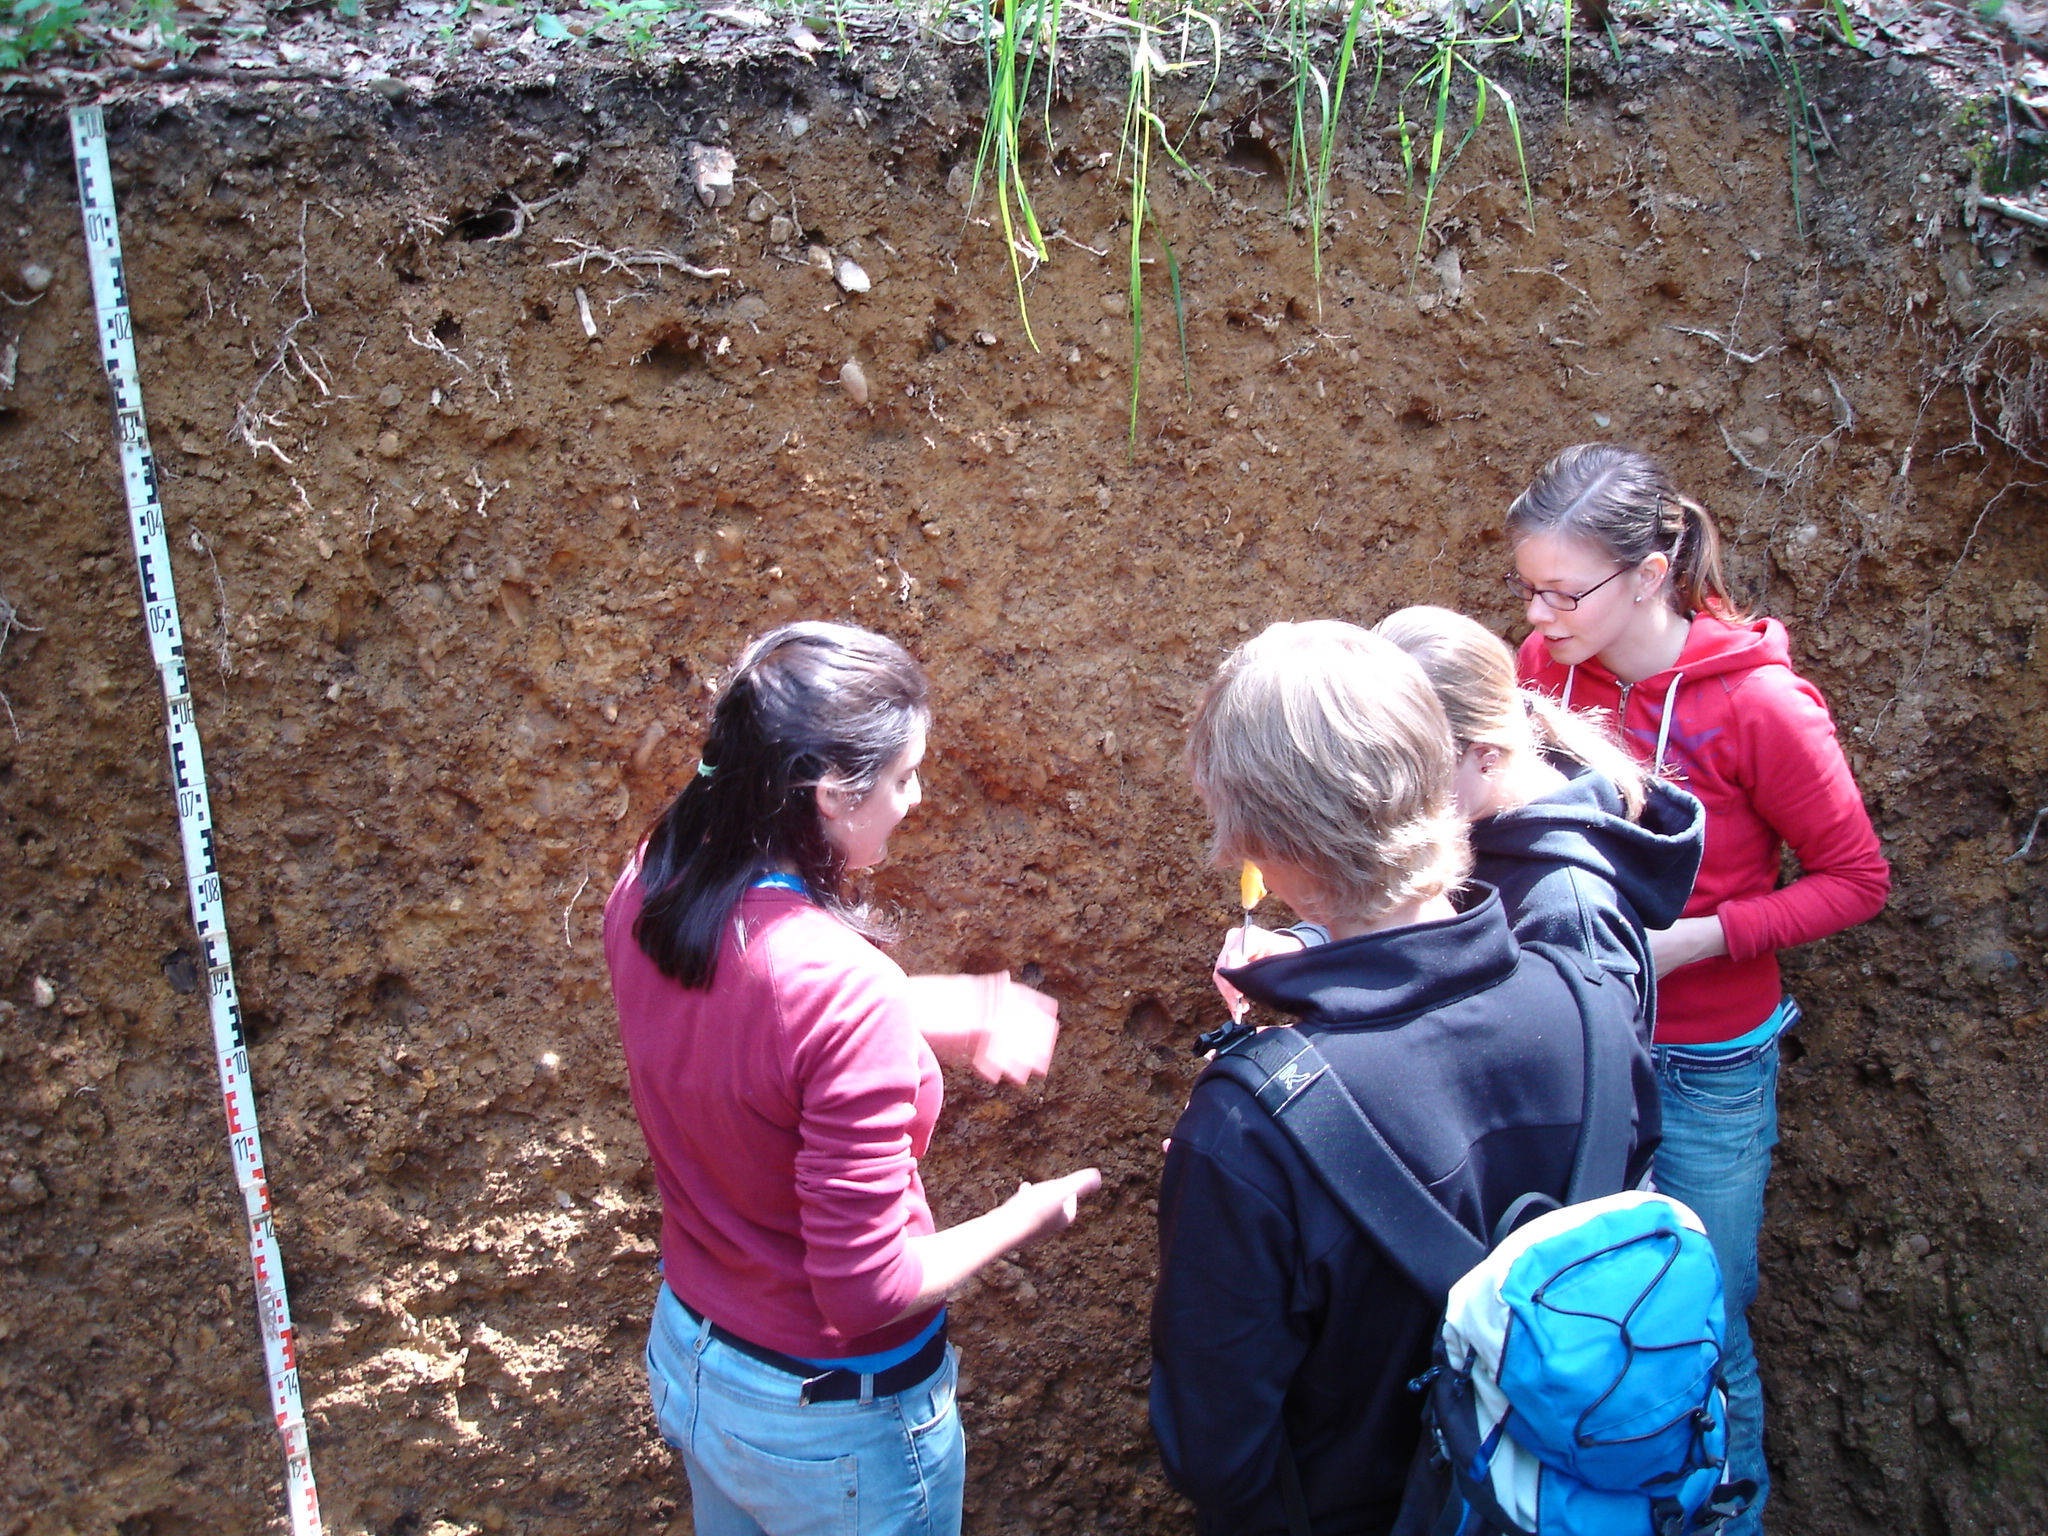 Enlarged view: Teaching soil science